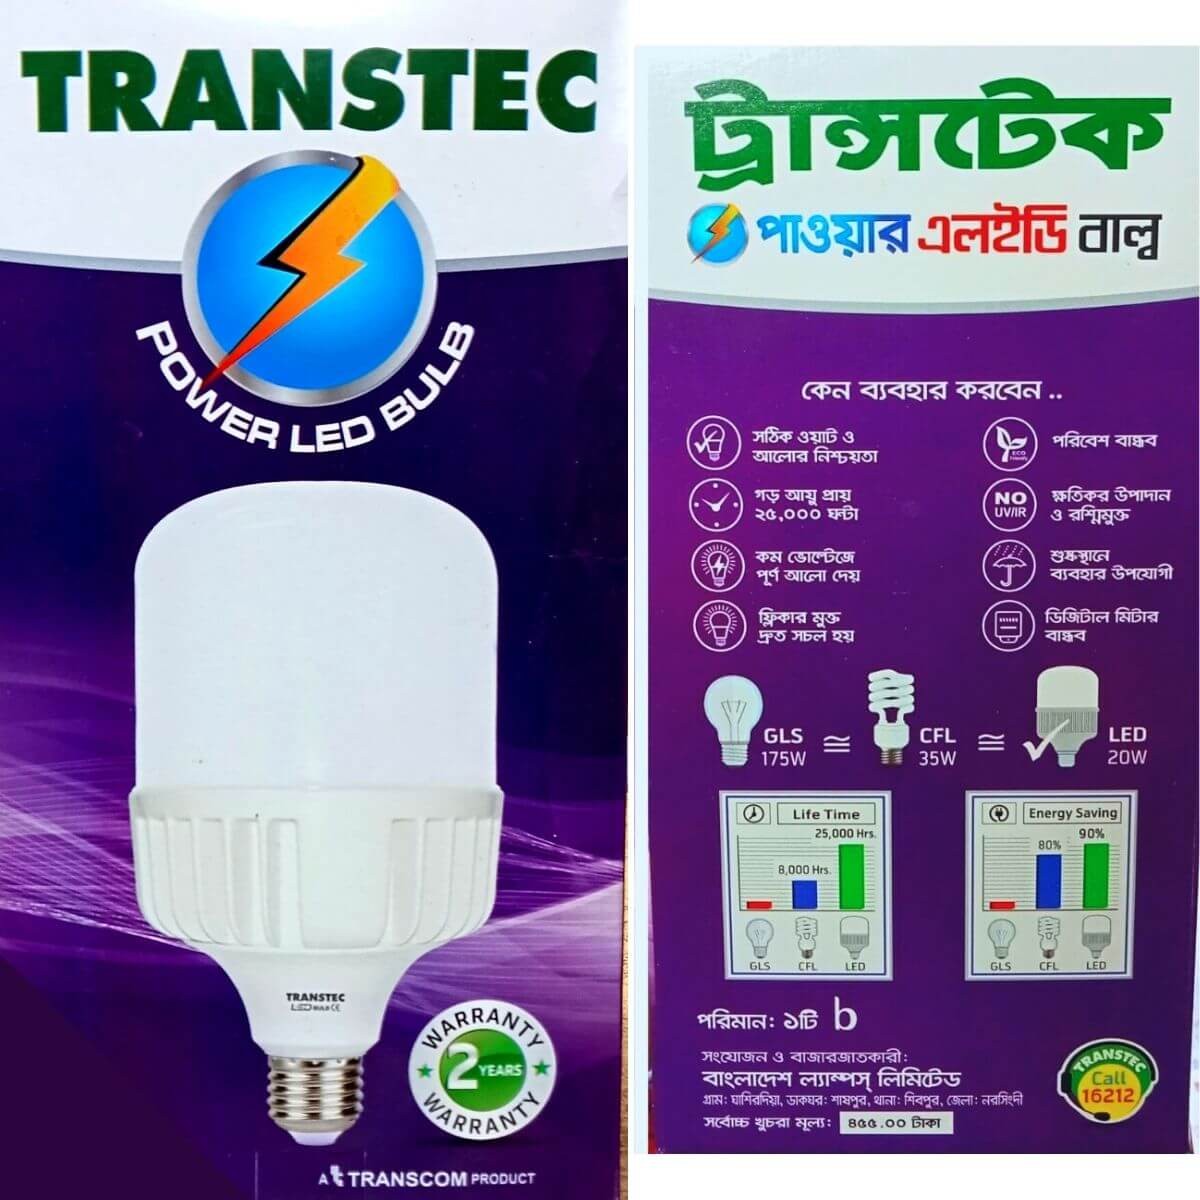 Transtec Bright 40Watt LED Bulb প্যাচ টাইপ... BD